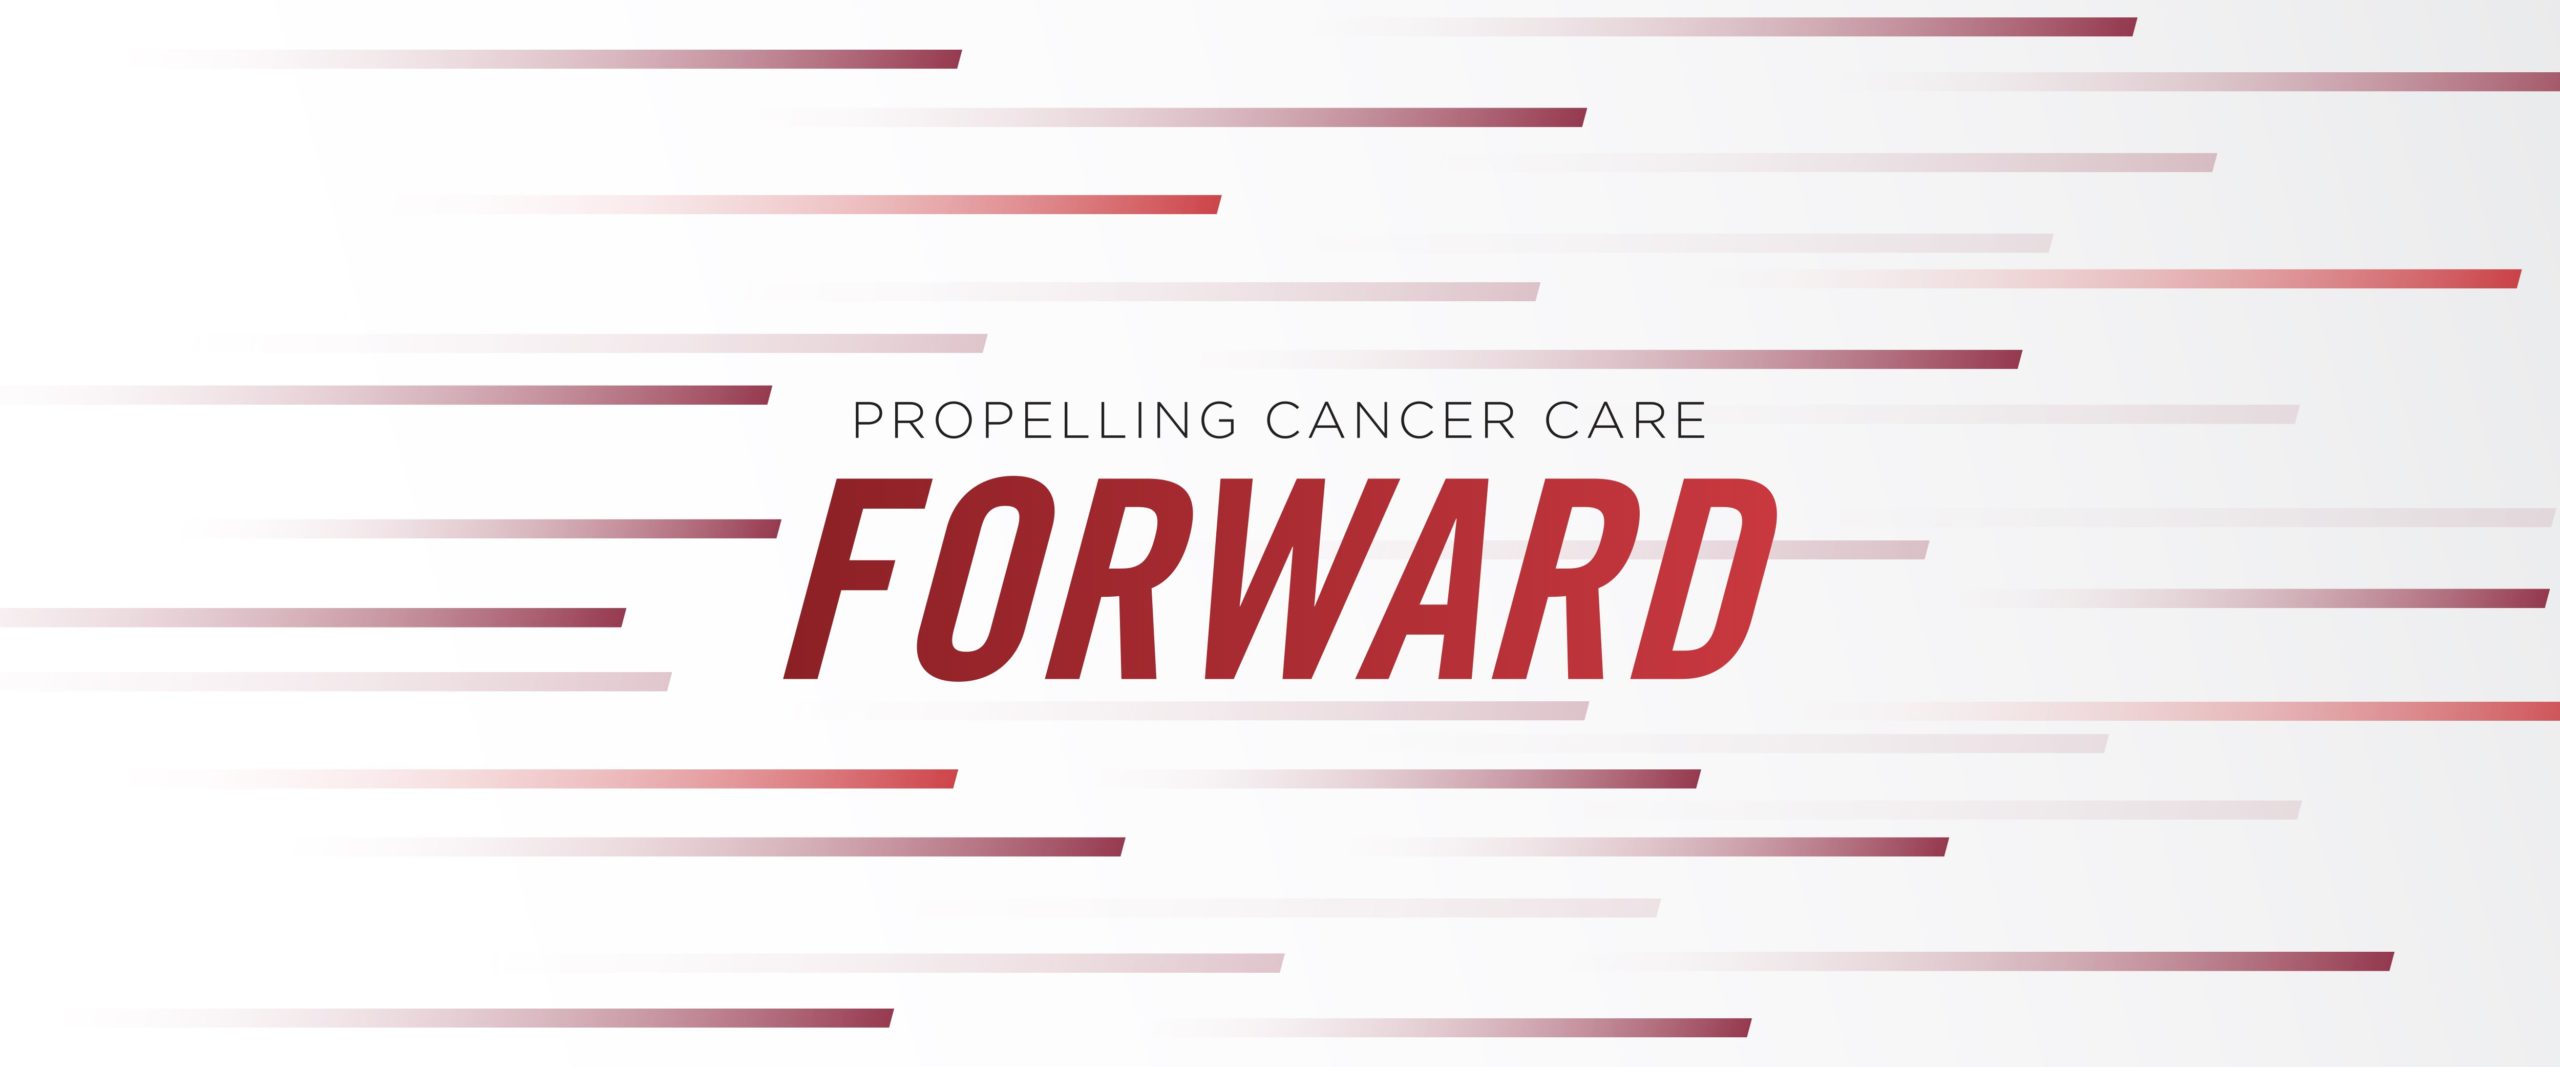 Propelling Cancer Care Forward blog